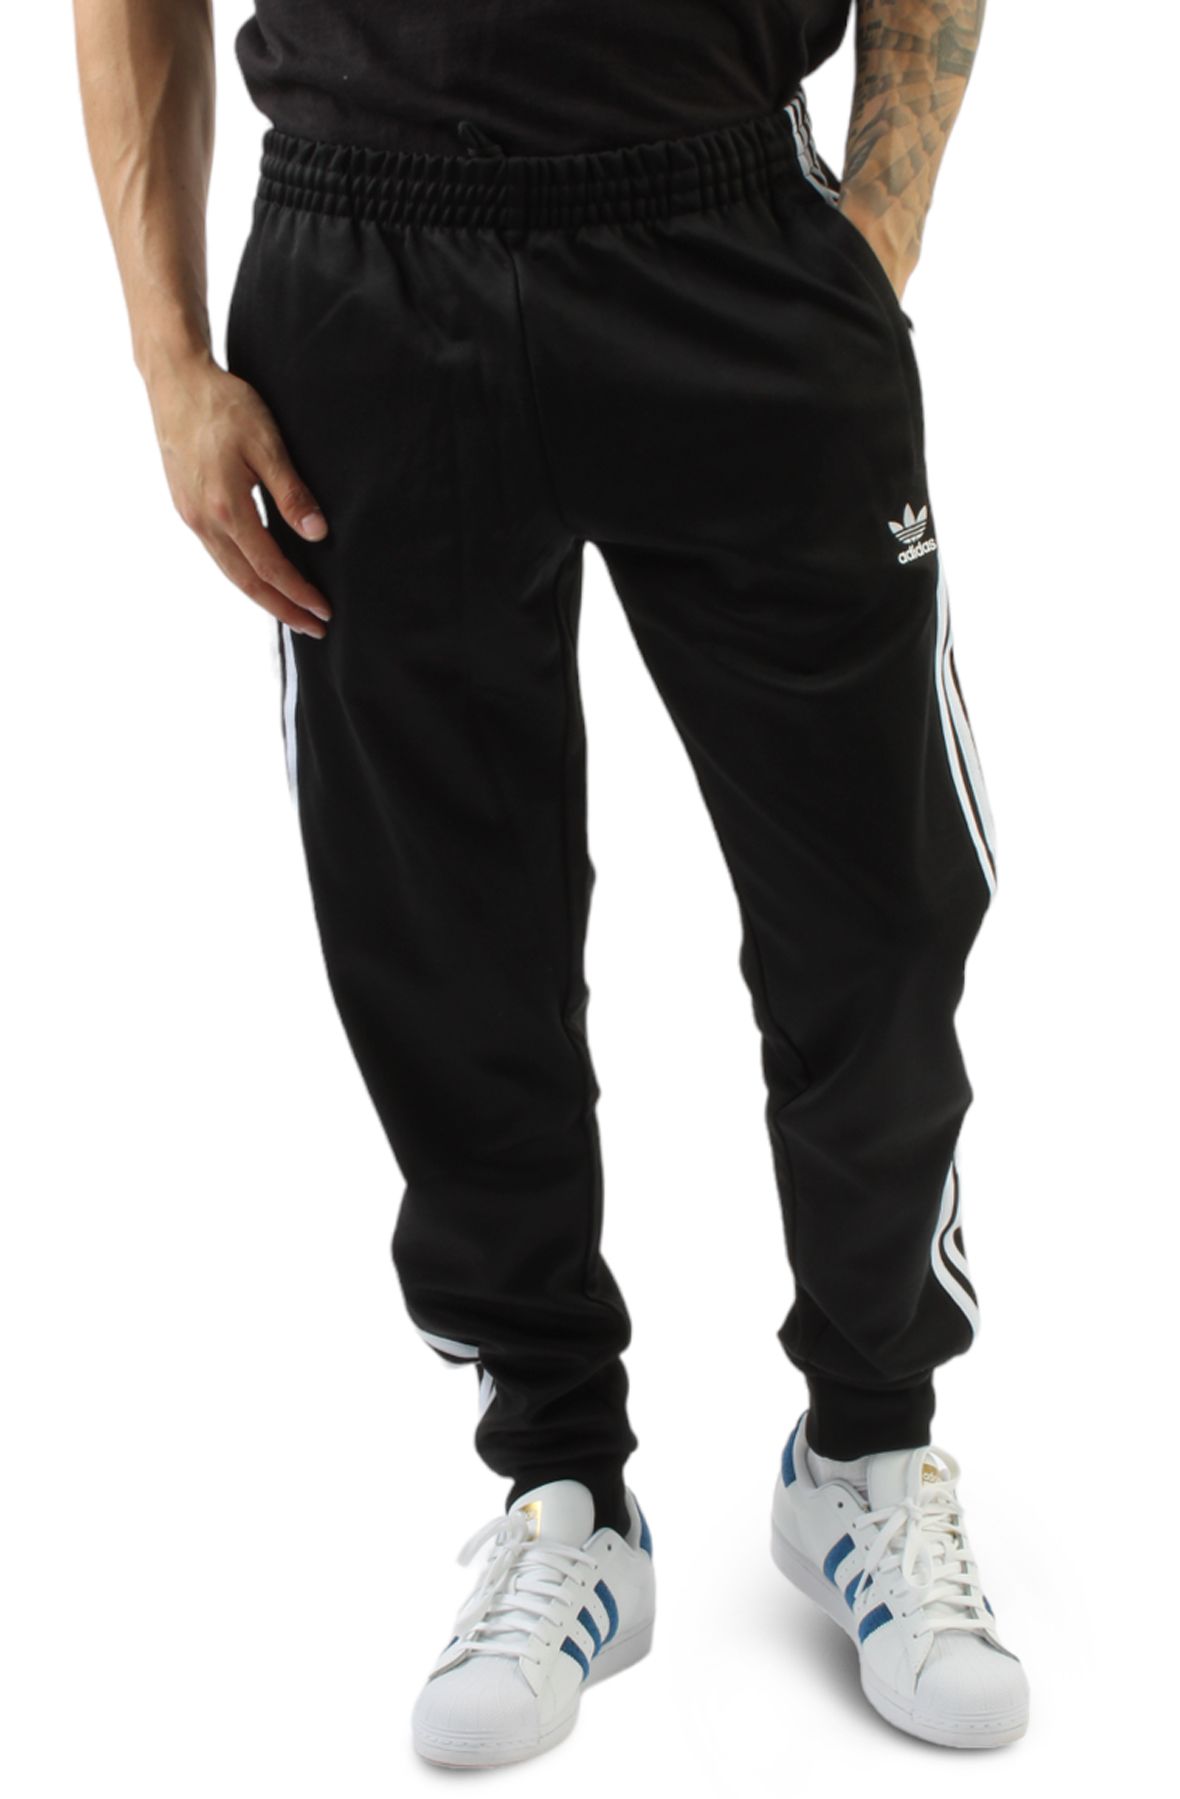  adidas Originals Men's Firebird Track Pants, black, M